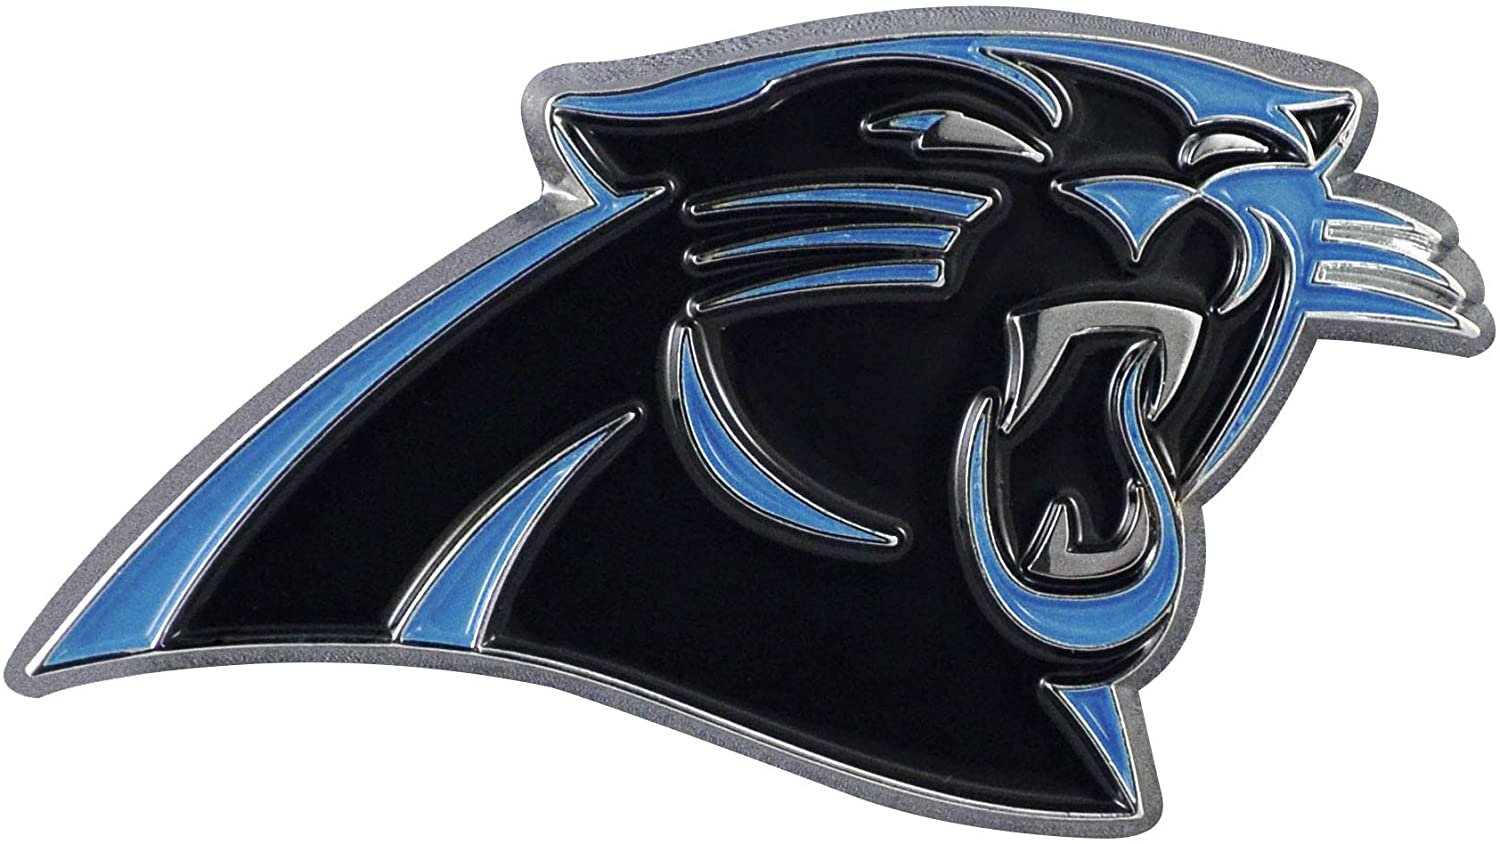 Carolina Panthers Premium Solid Metal Raised Auto Emblem, Team Color, Shape Cut, Adhesive Backing